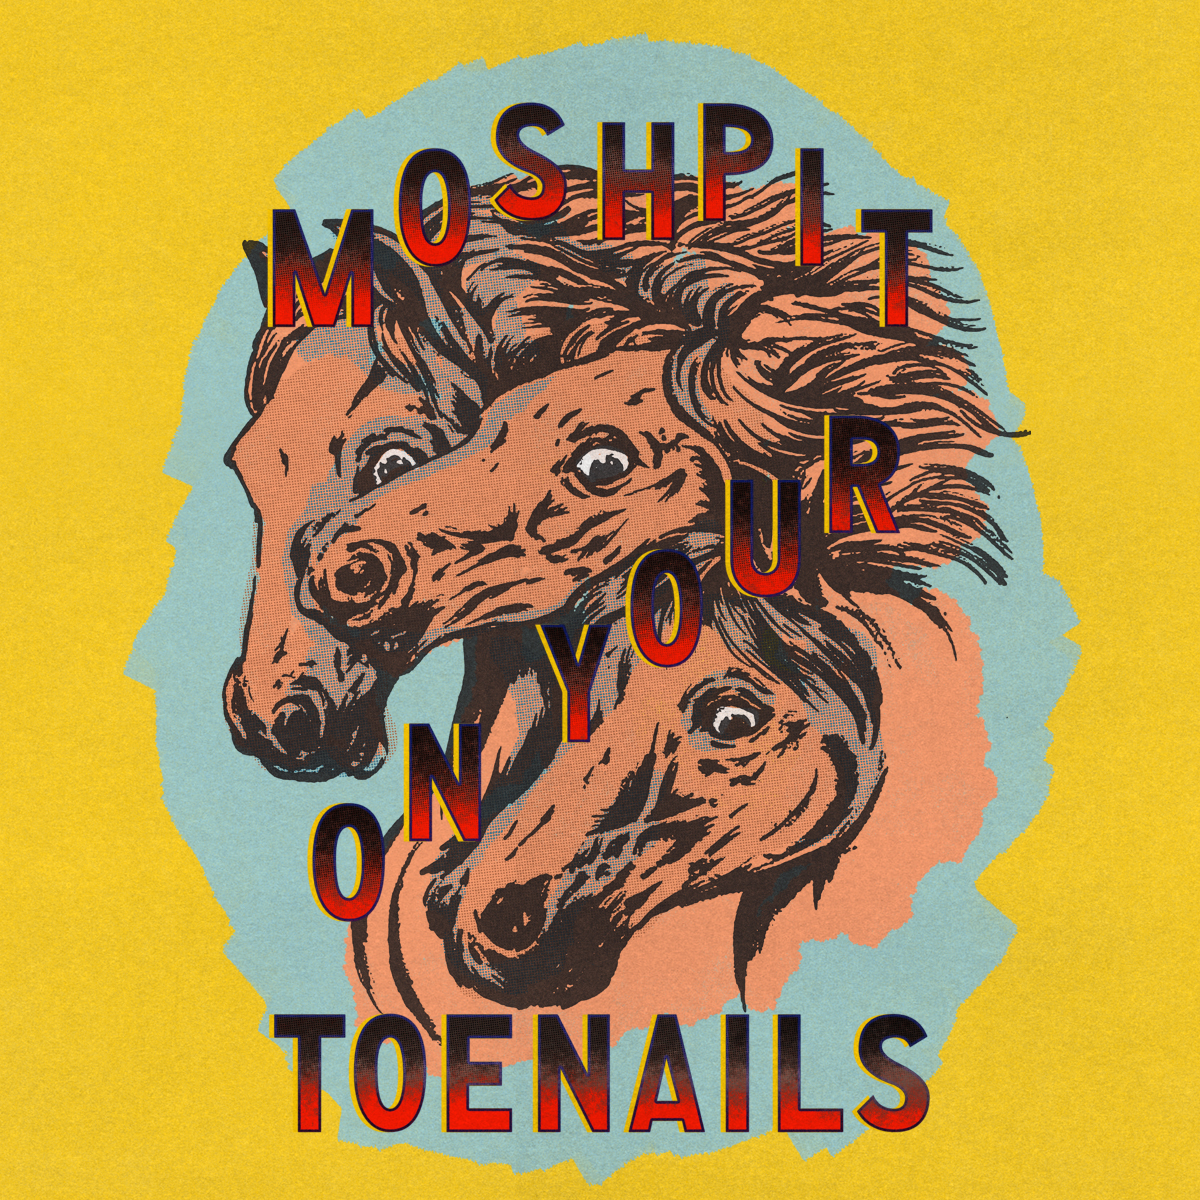 Moshpit on Your Toenails